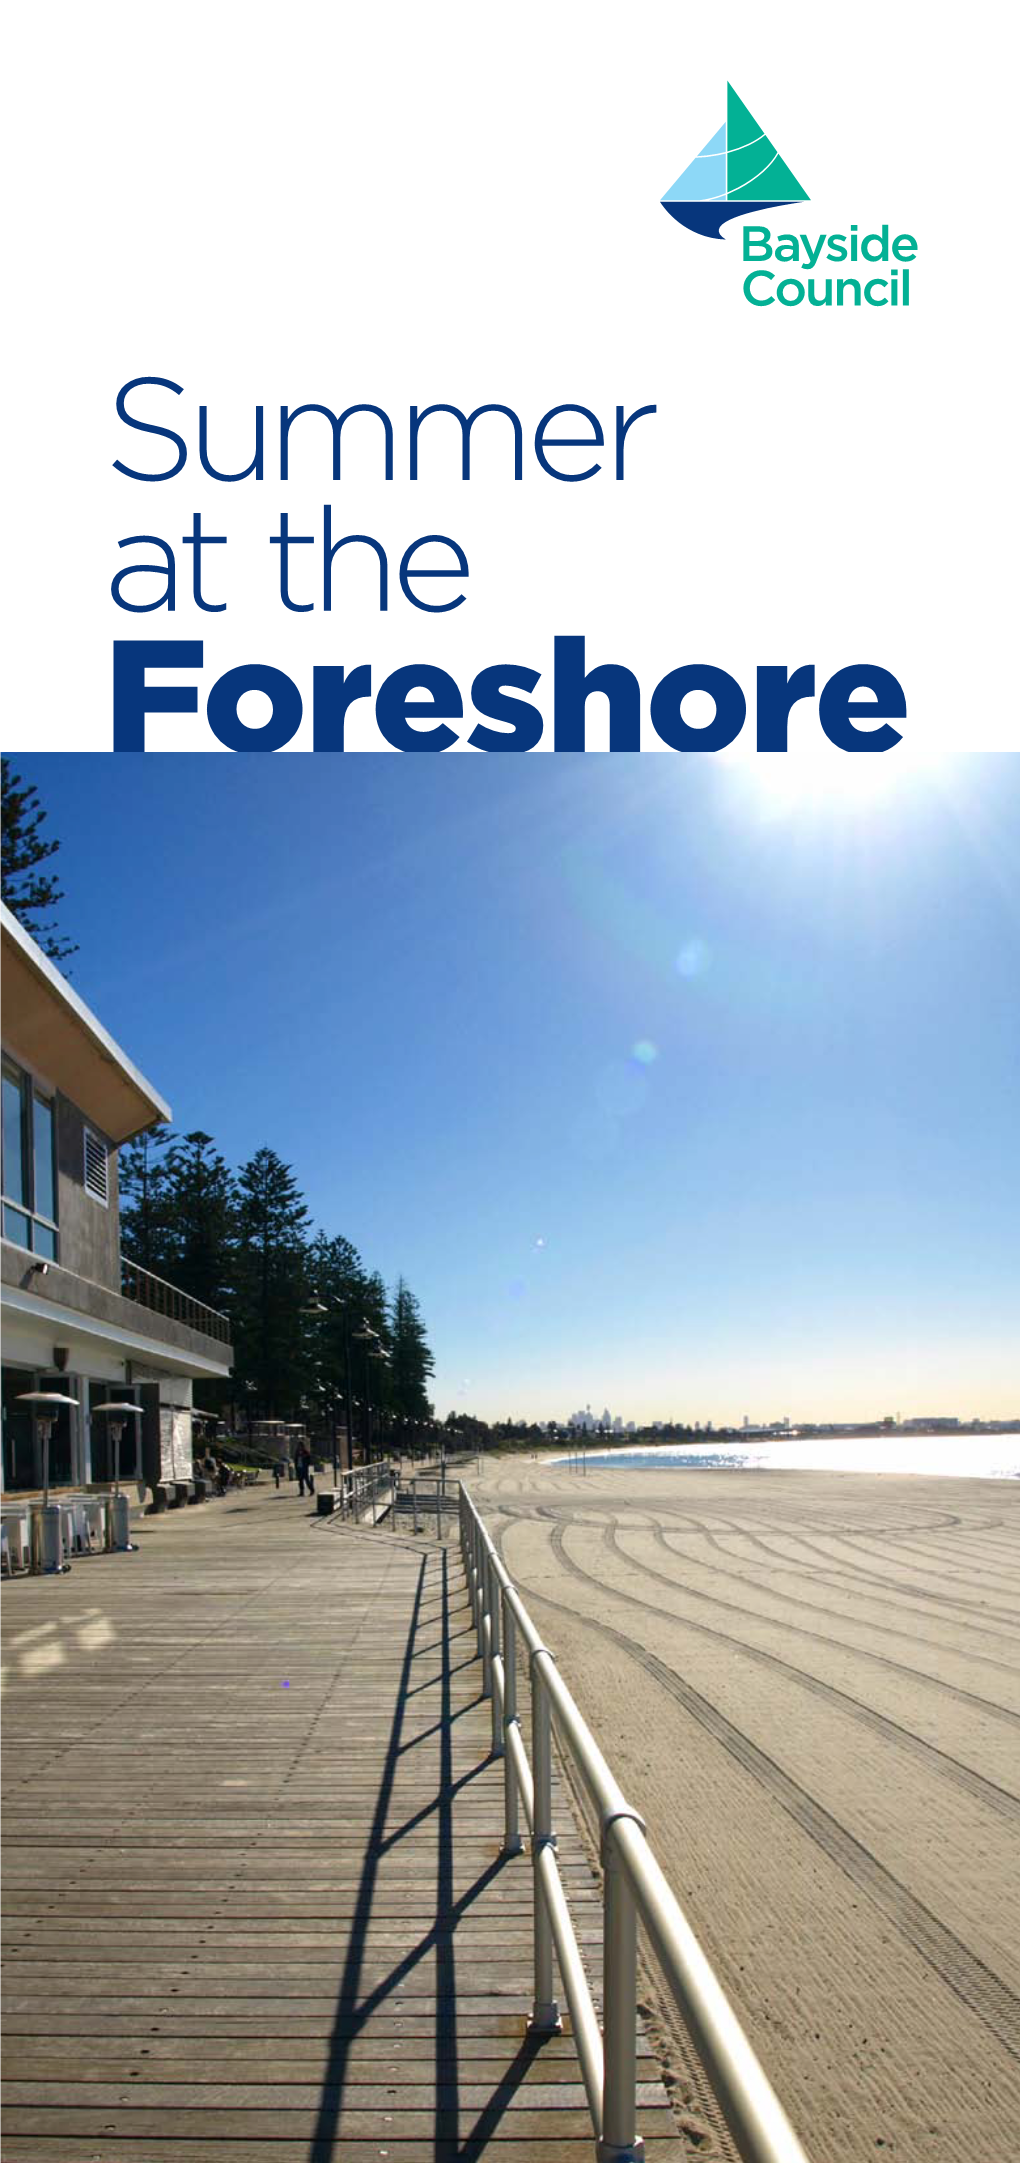 Summer at the Foreshore Summer Foreshore Enhancement Program 2019/20